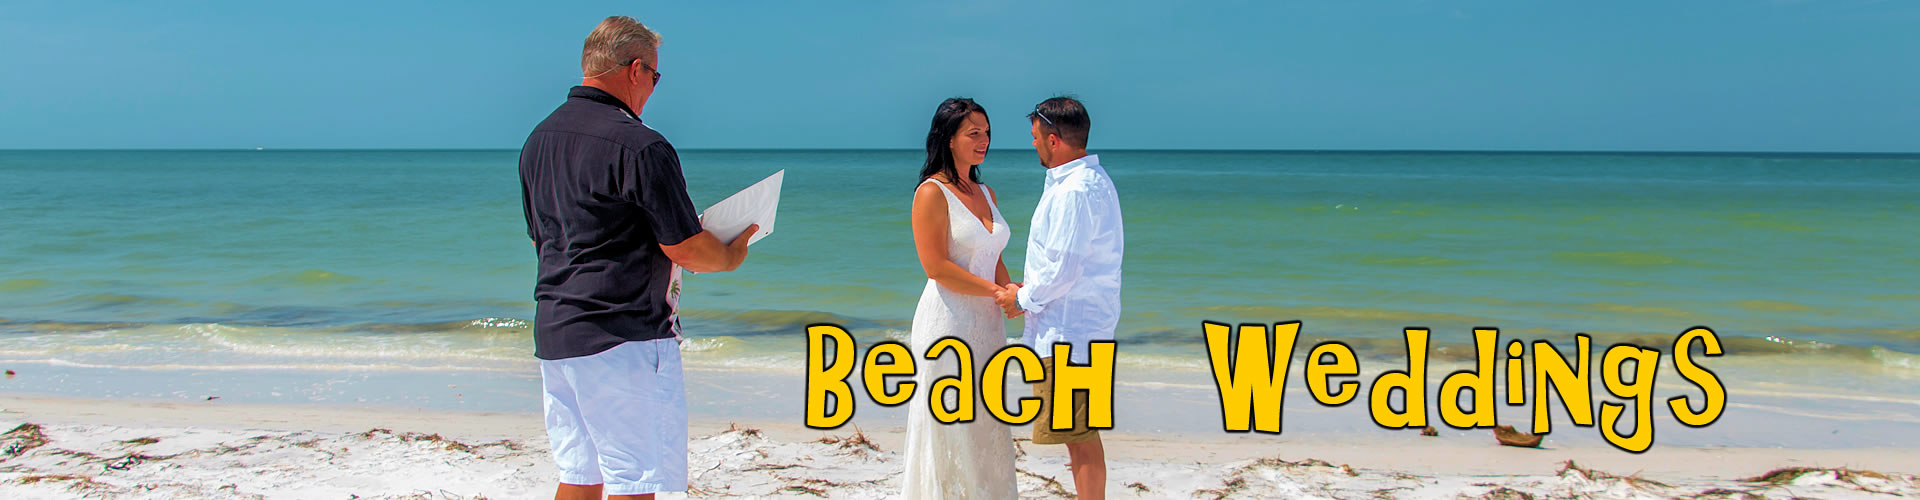 Beach Weddings Tampa